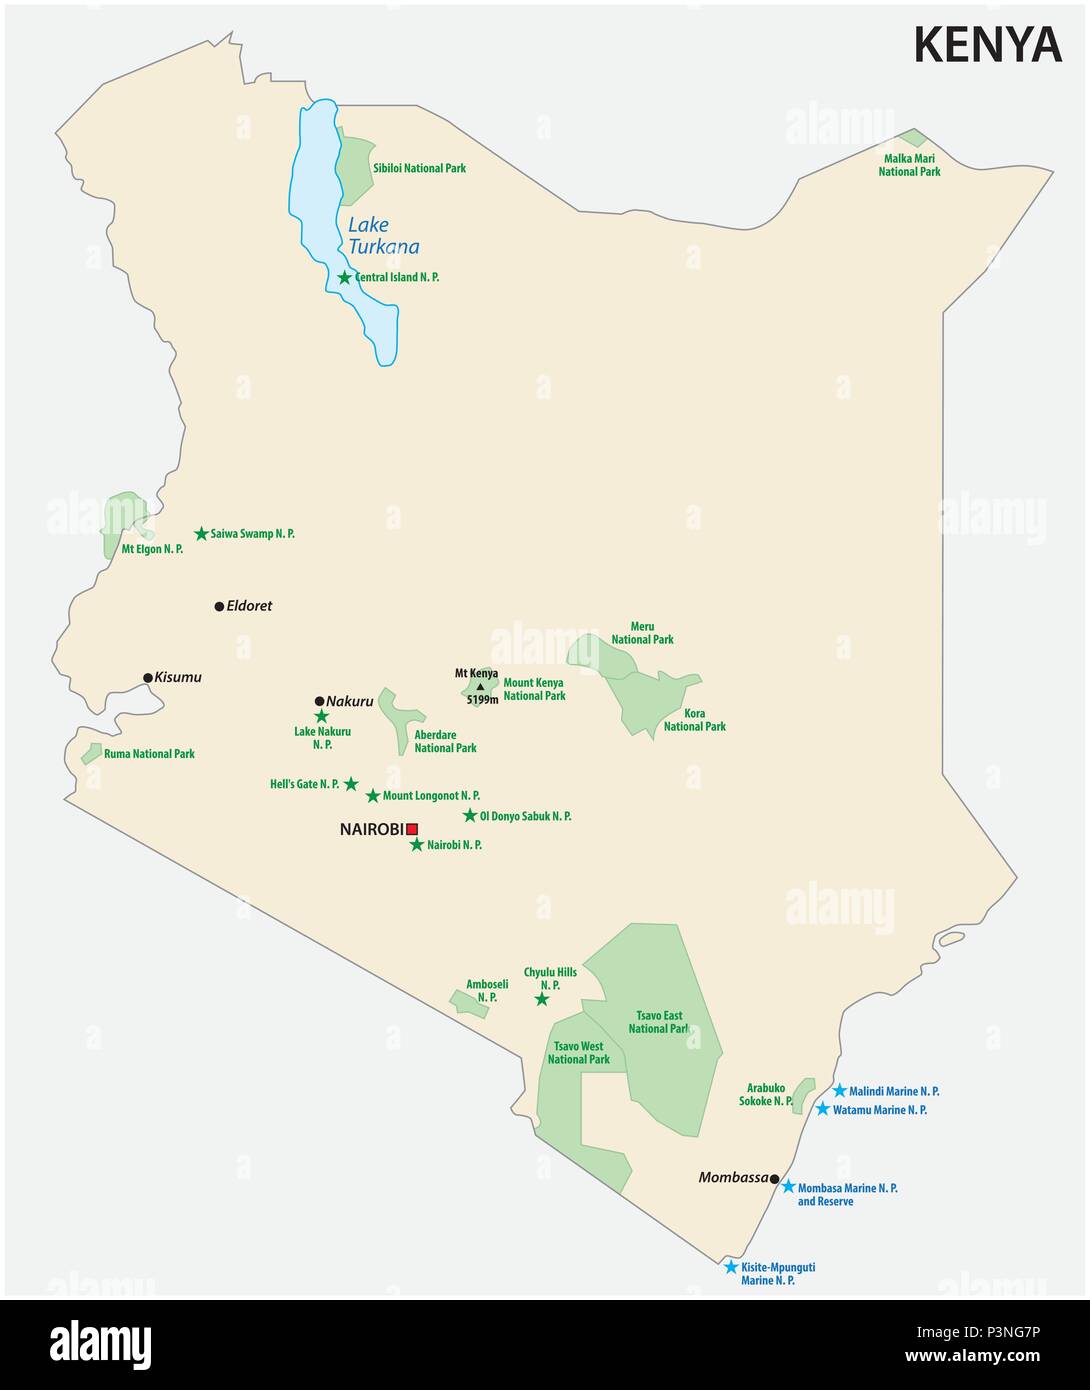 Republic of Kenya national park vector map Stock Vector